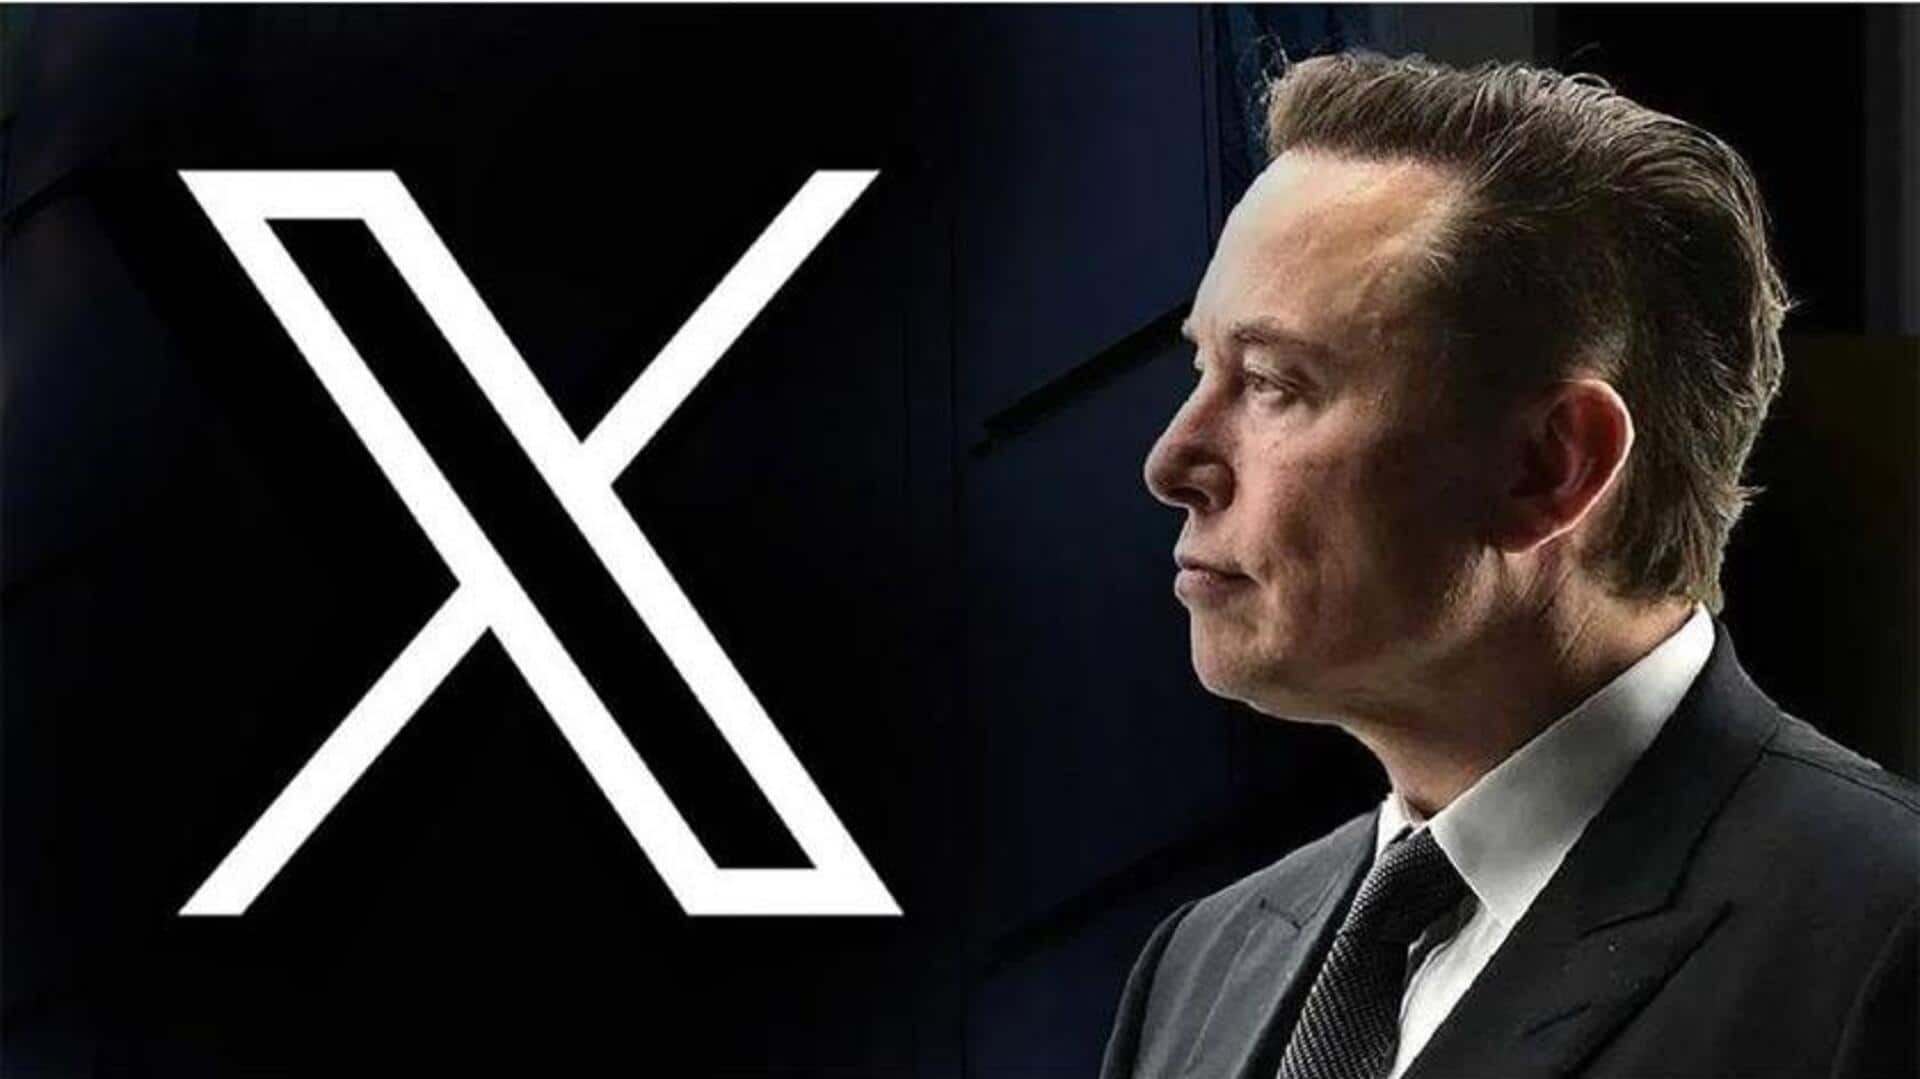 X suspends journalists critical of Elon Musk